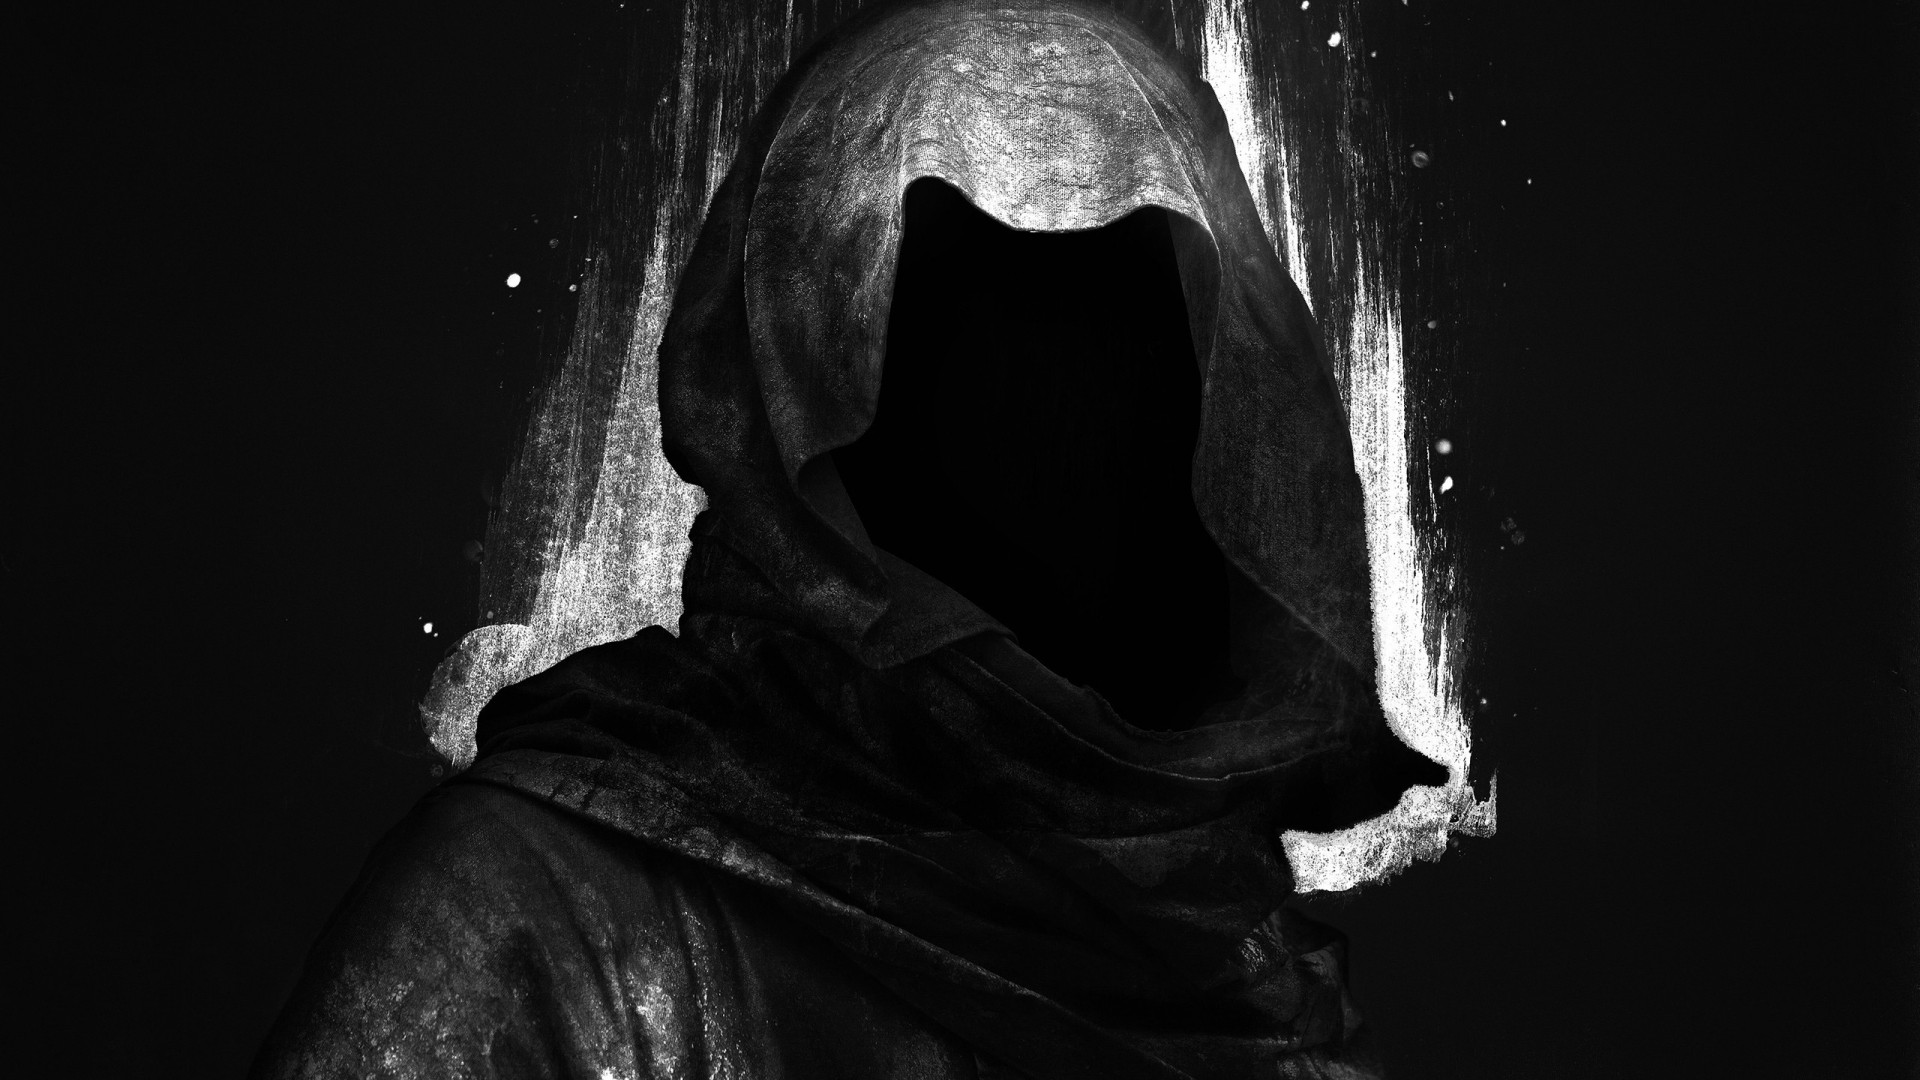 black background, Digital art, Hoods, Faceless, Dark, Grim Reaper